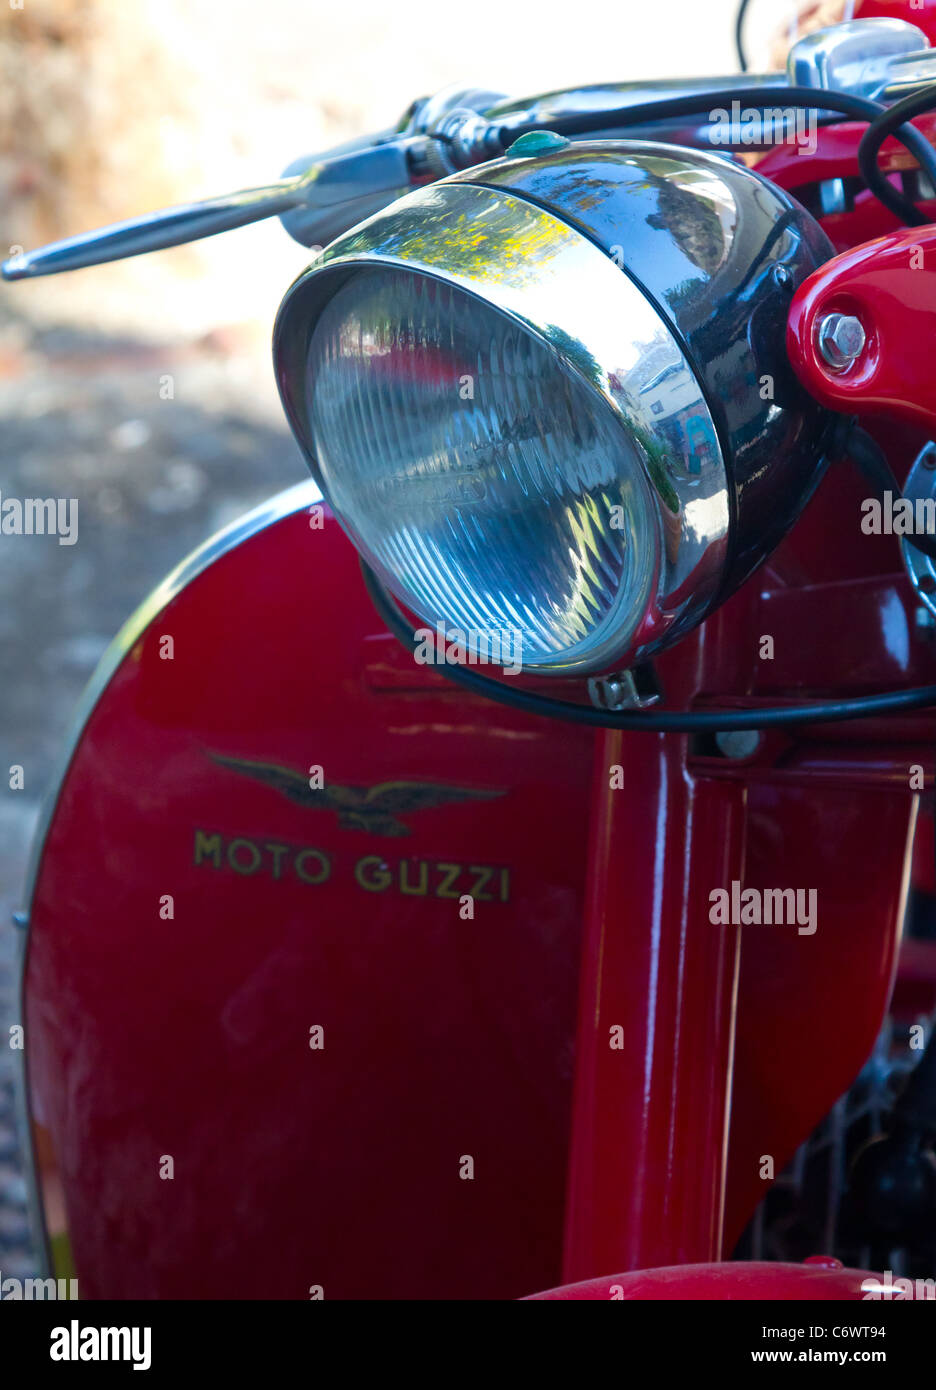 Guzzi motorbike hi-res stock photography and images - Alamy